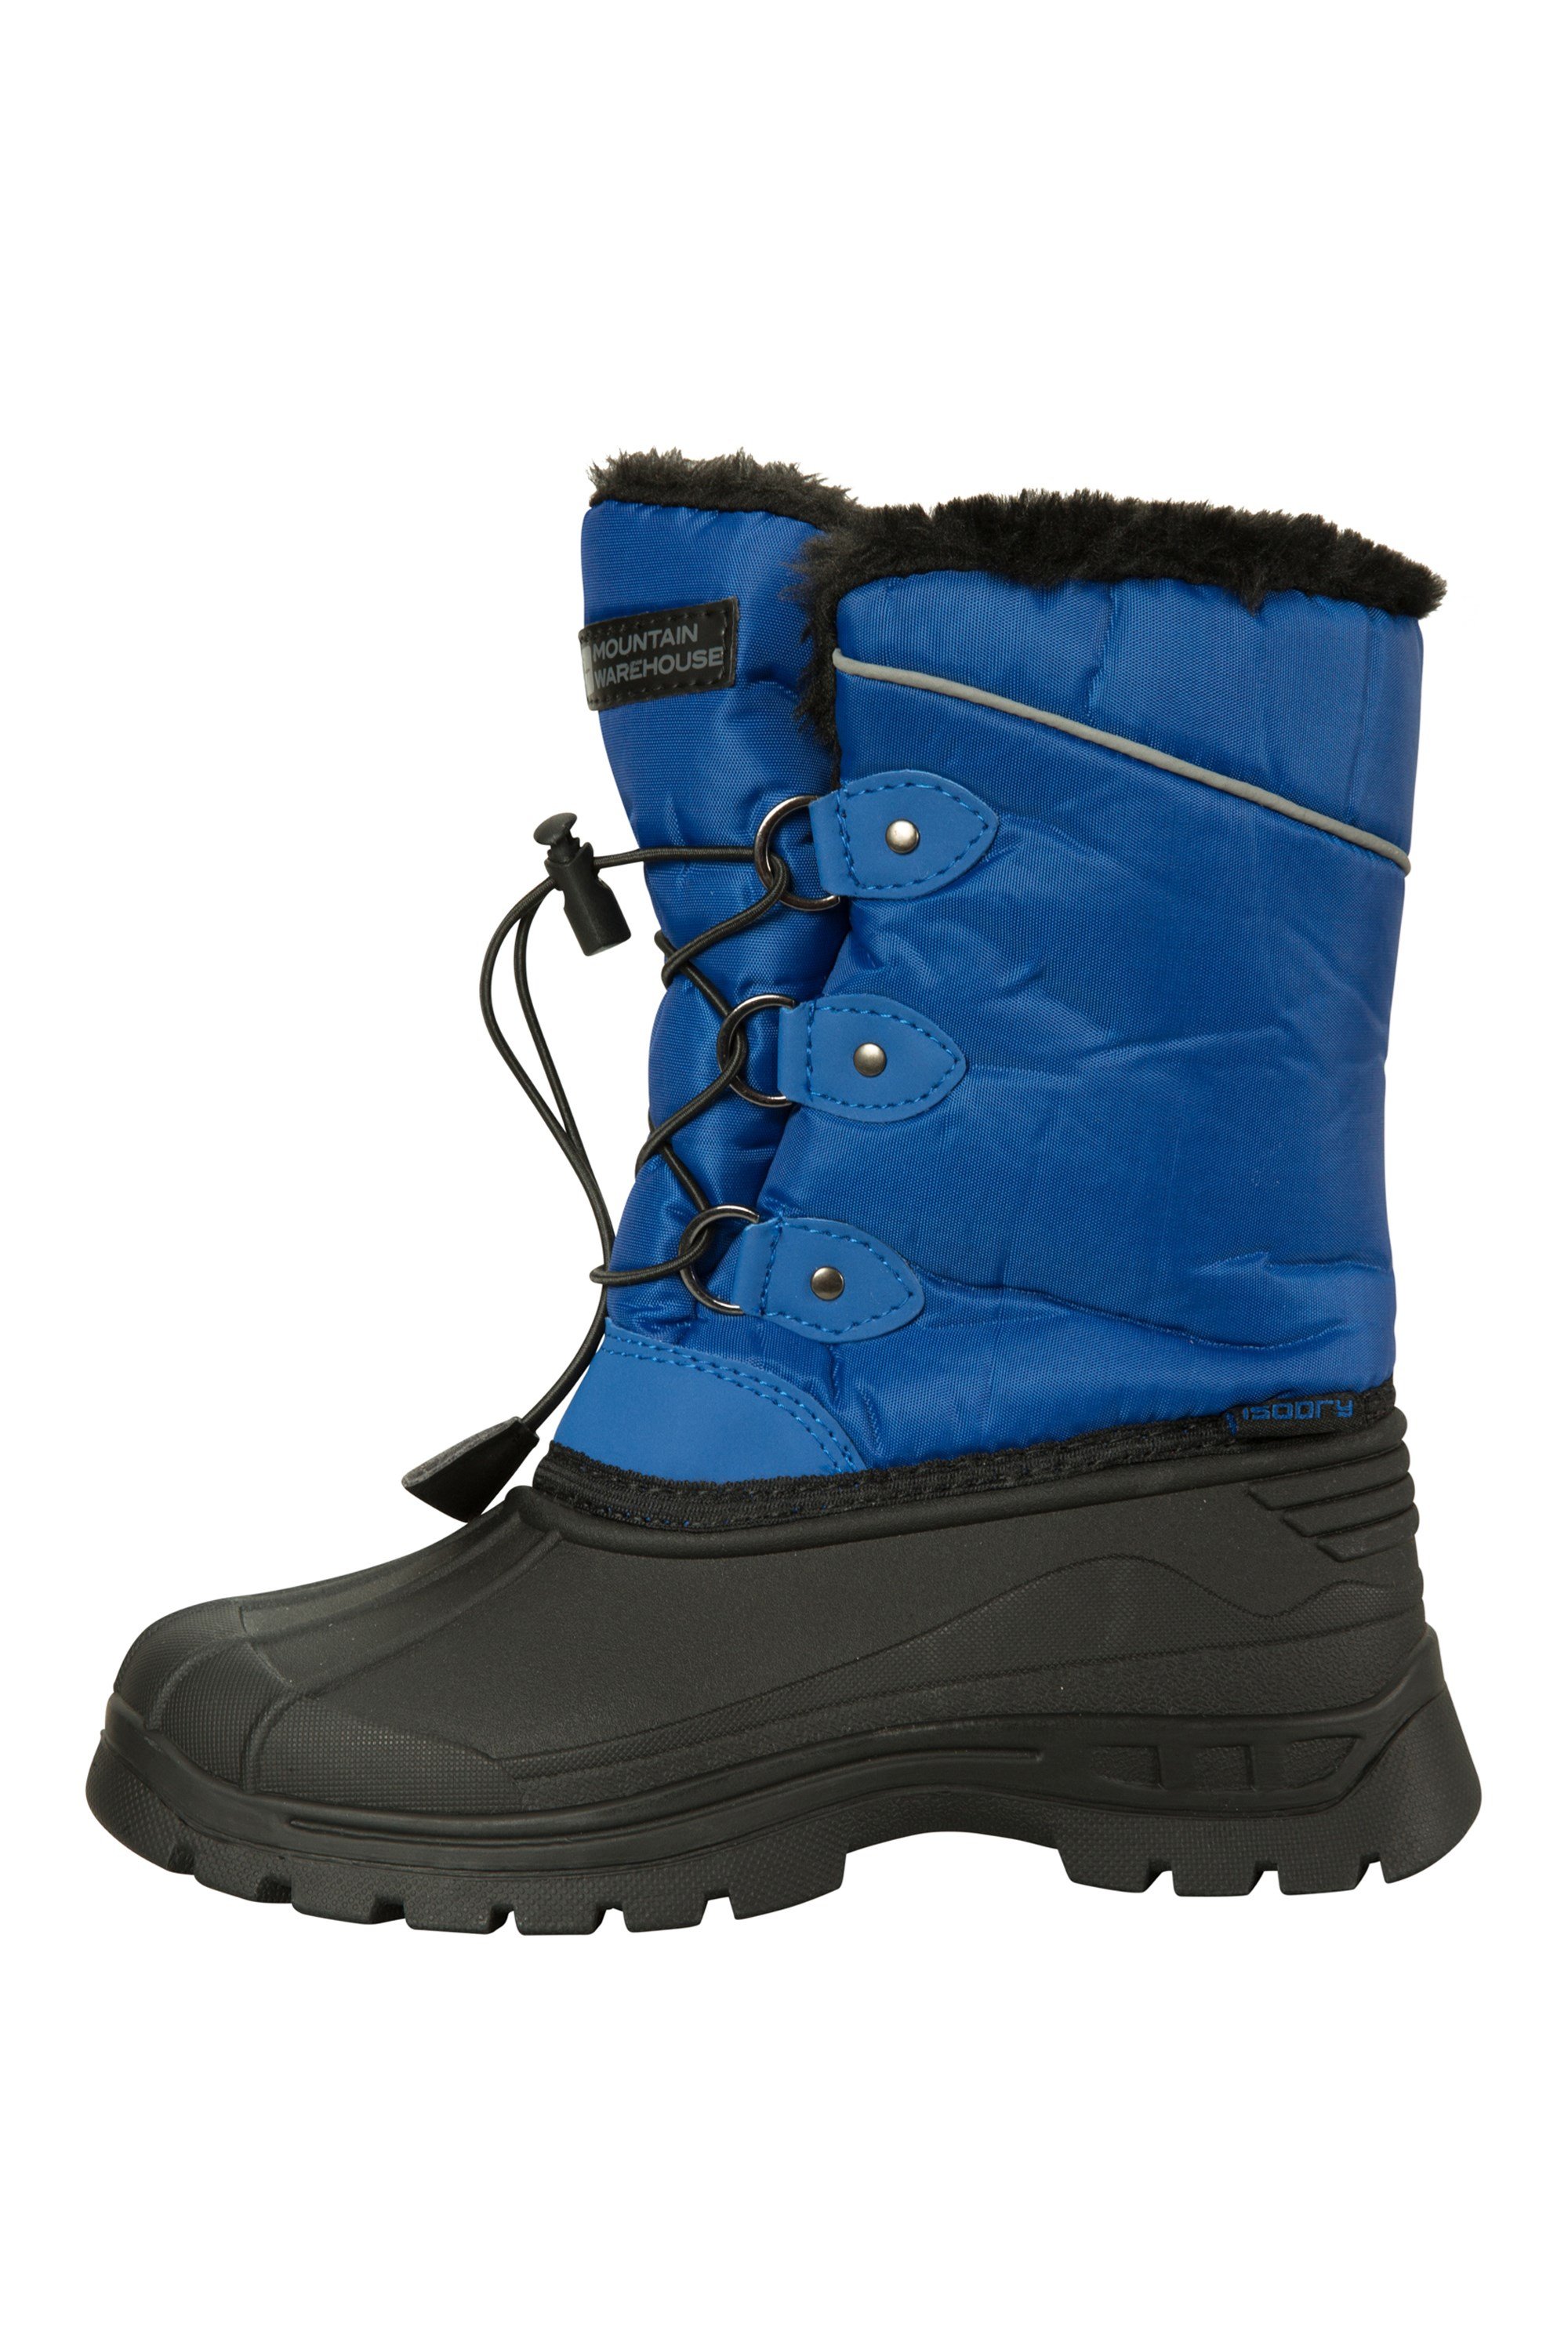 mountain warehouse snow boots kids